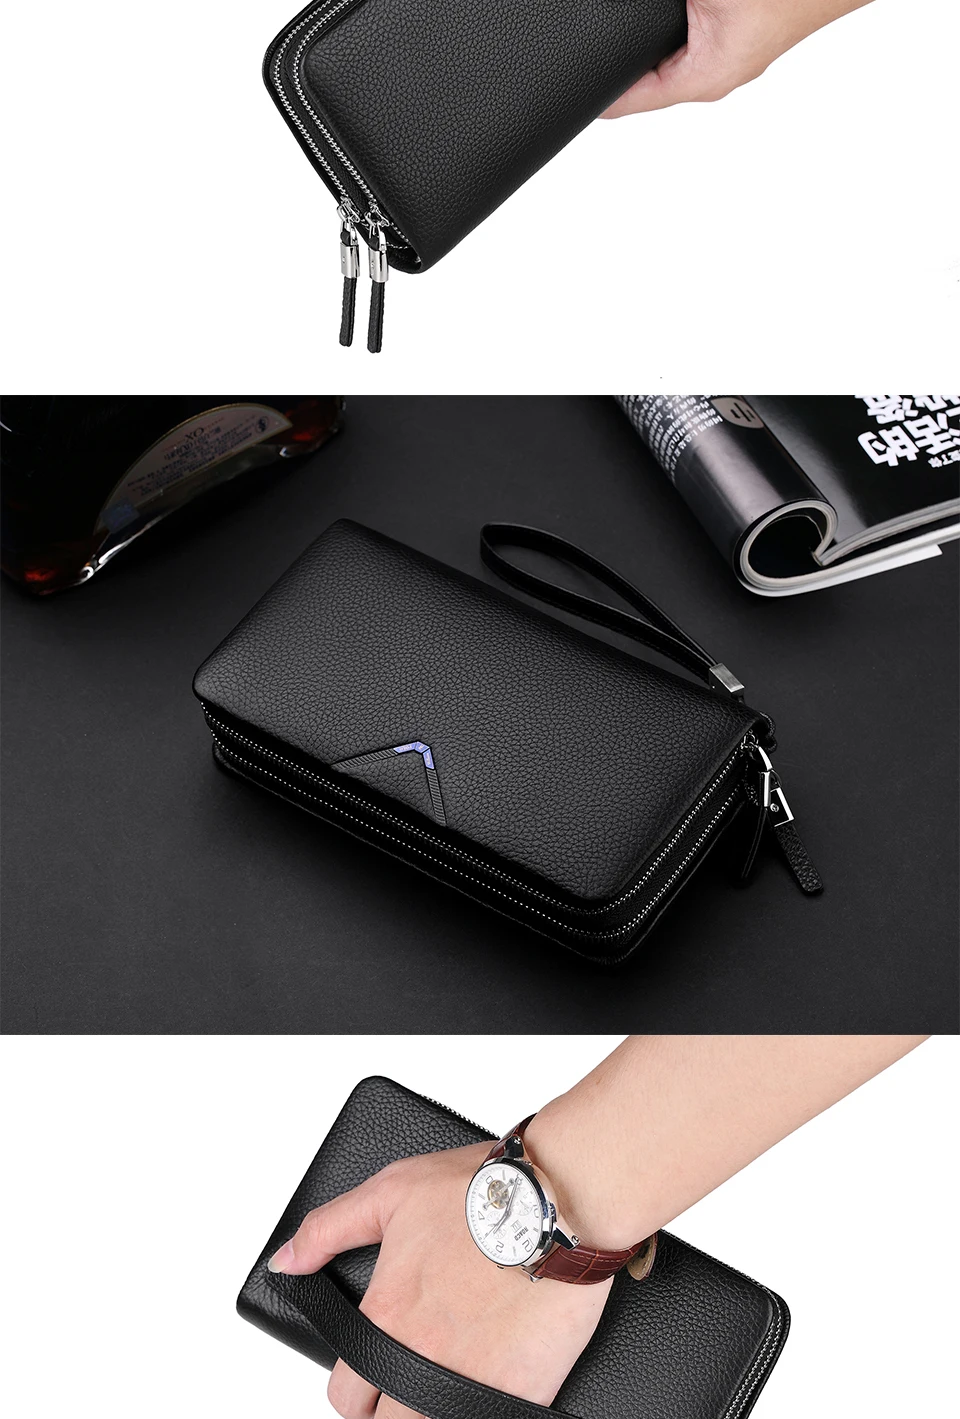 Best Travel Wallet Double Zipper Money Clip Men's Clutch Genuine Leather 9069B Black